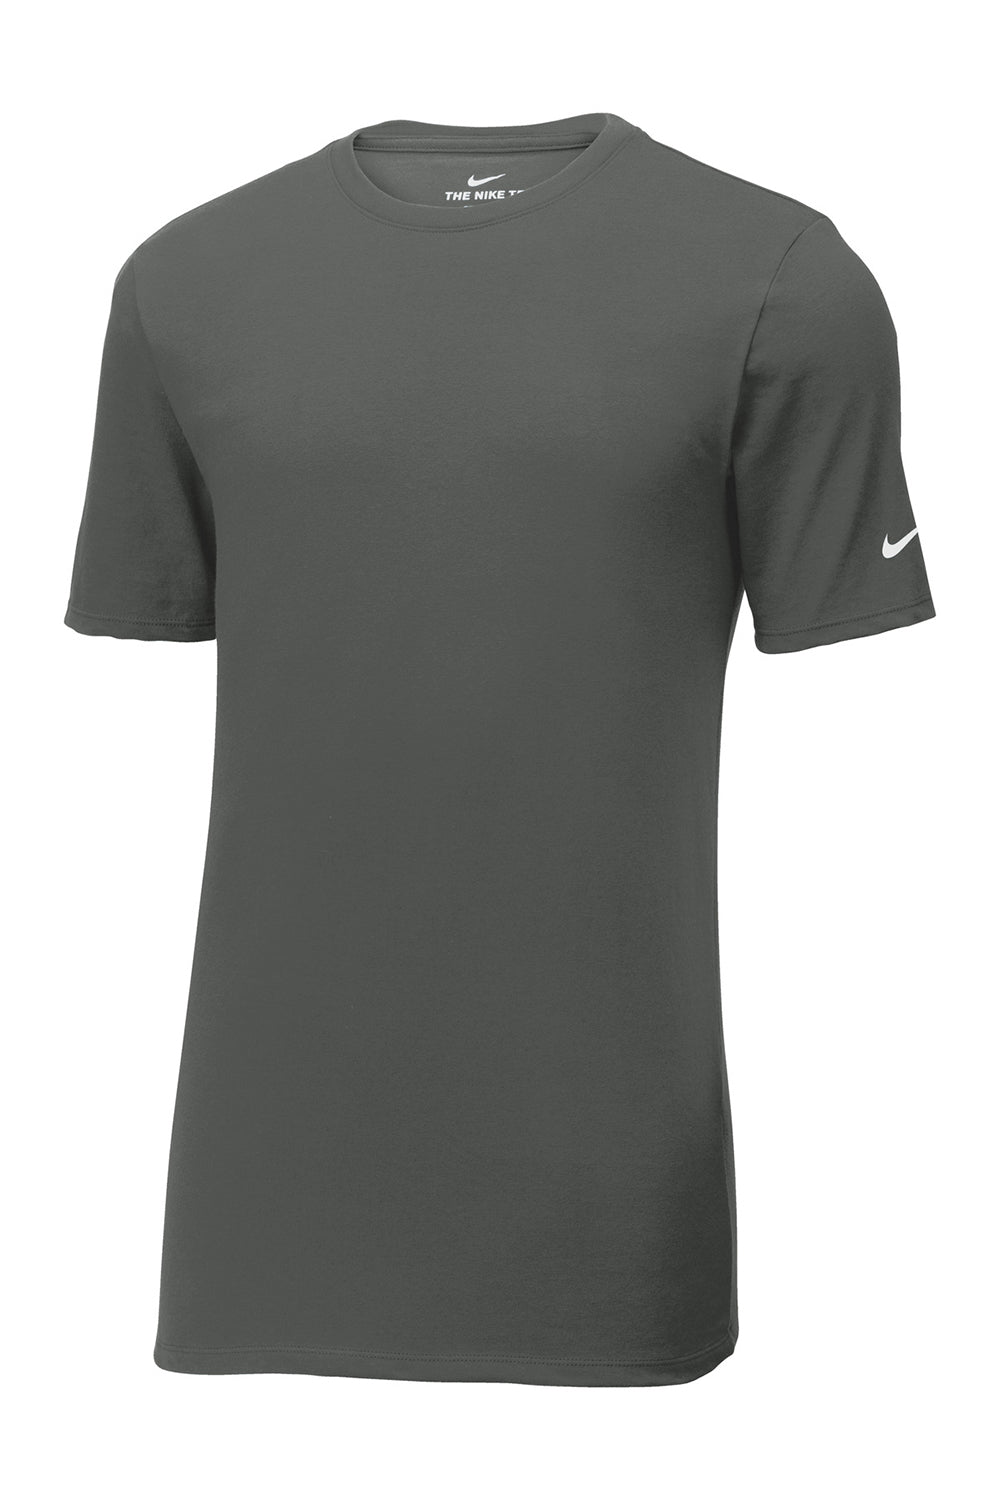 Nike NKBQ5231 Mens Dri-Fit Moisture Wicking Short Sleeve Crewneck T-Shirt Anthracite Grey Flat Front